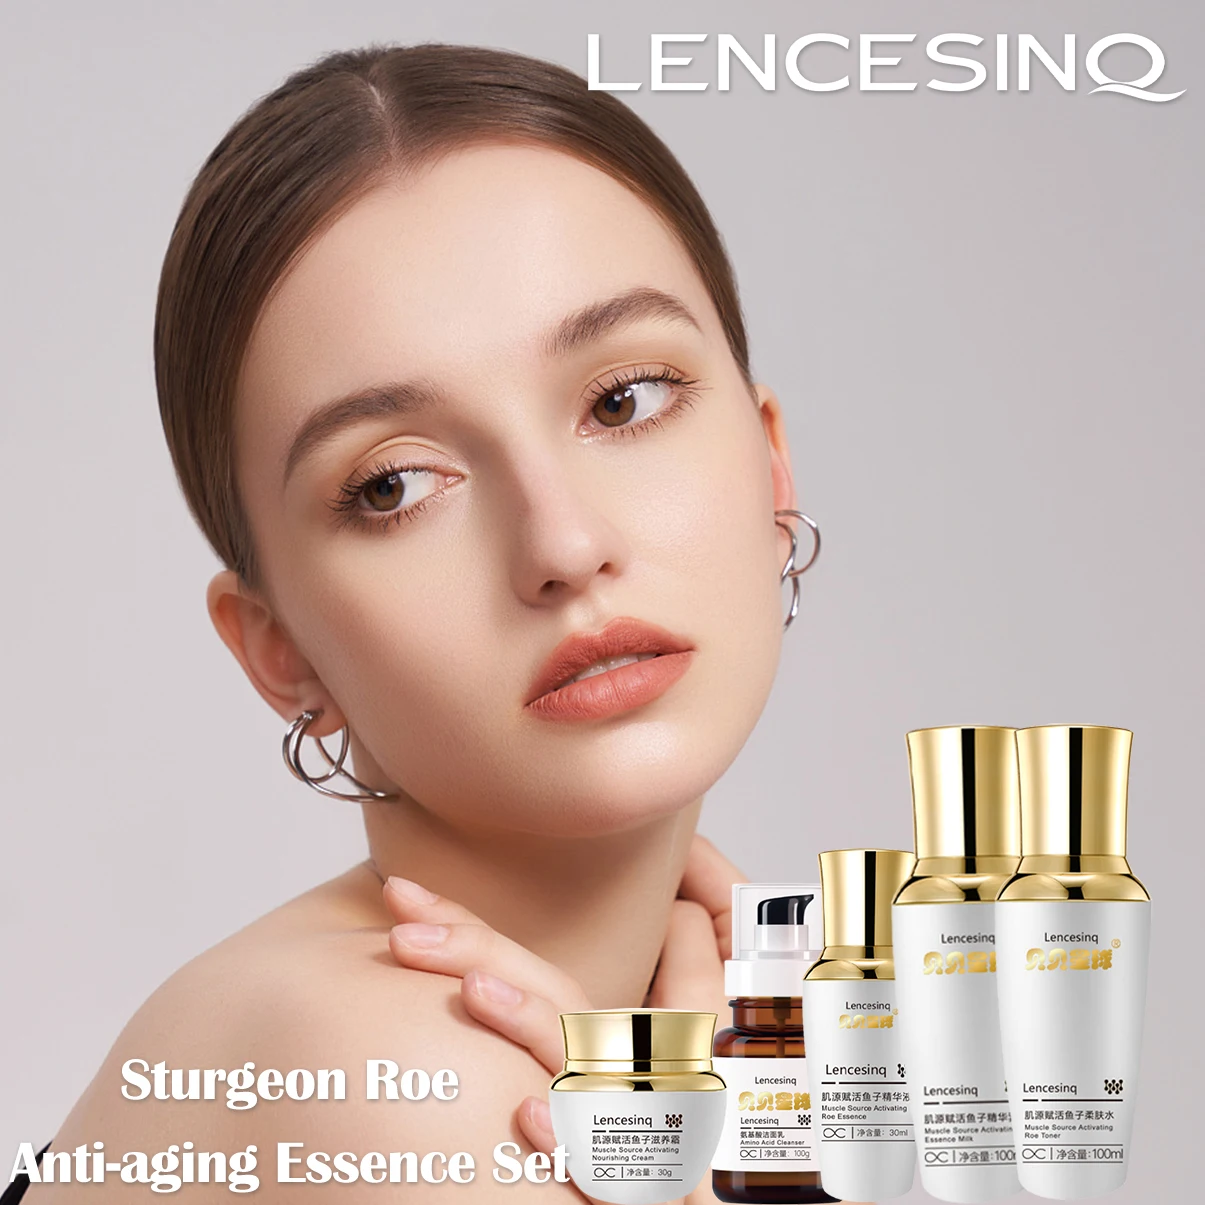 

Lencesinq Revolution SkinCare Set Tighten and Firm Aging Anti Wrinkles Face Cream+Essence+Cleanser+Toner+Essence Milk